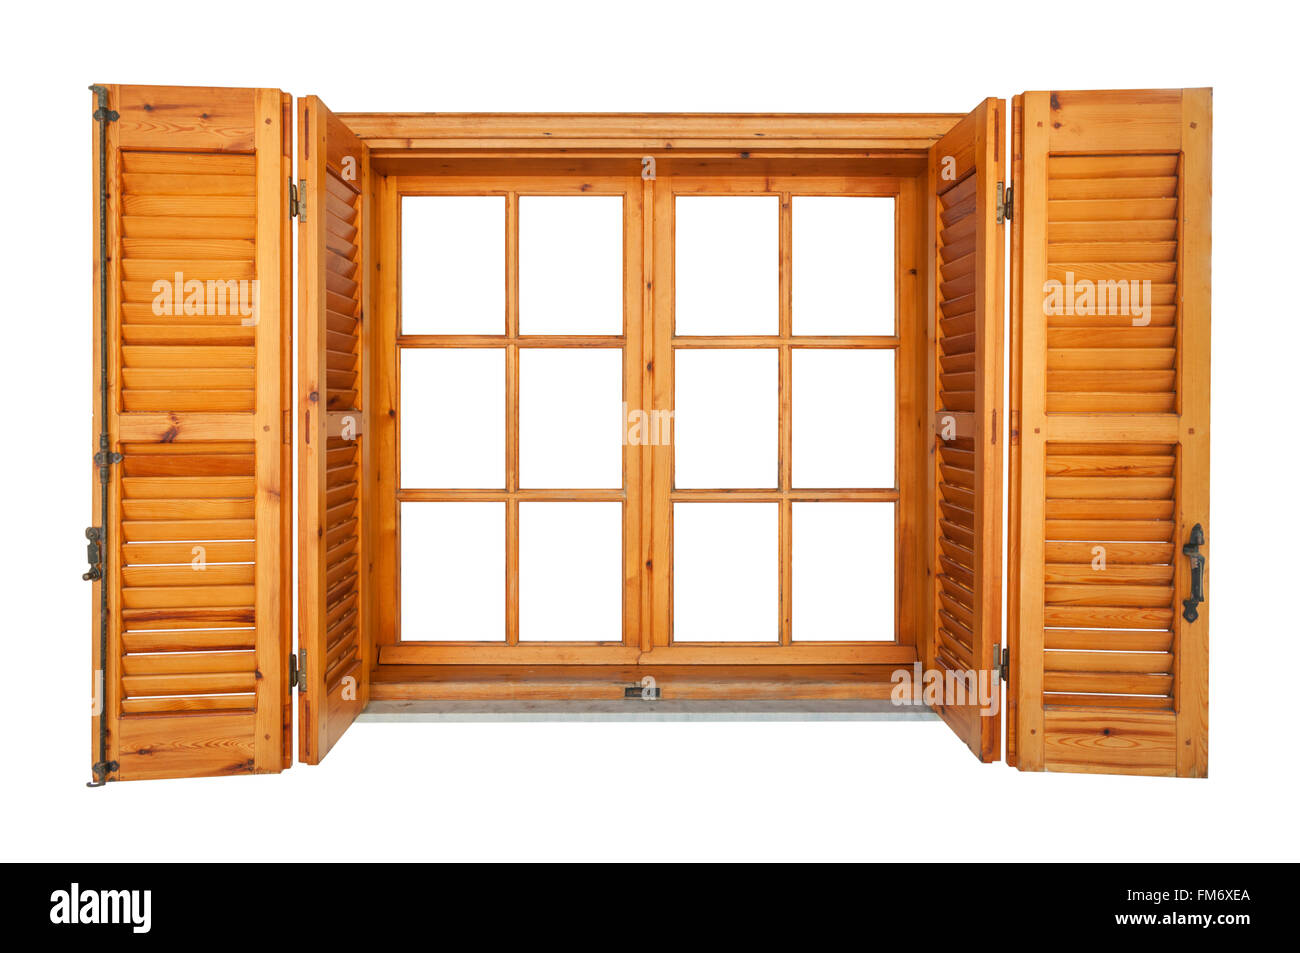 Con persianas de madera de ventana lateral exterior aislado en blanco Foto de stock